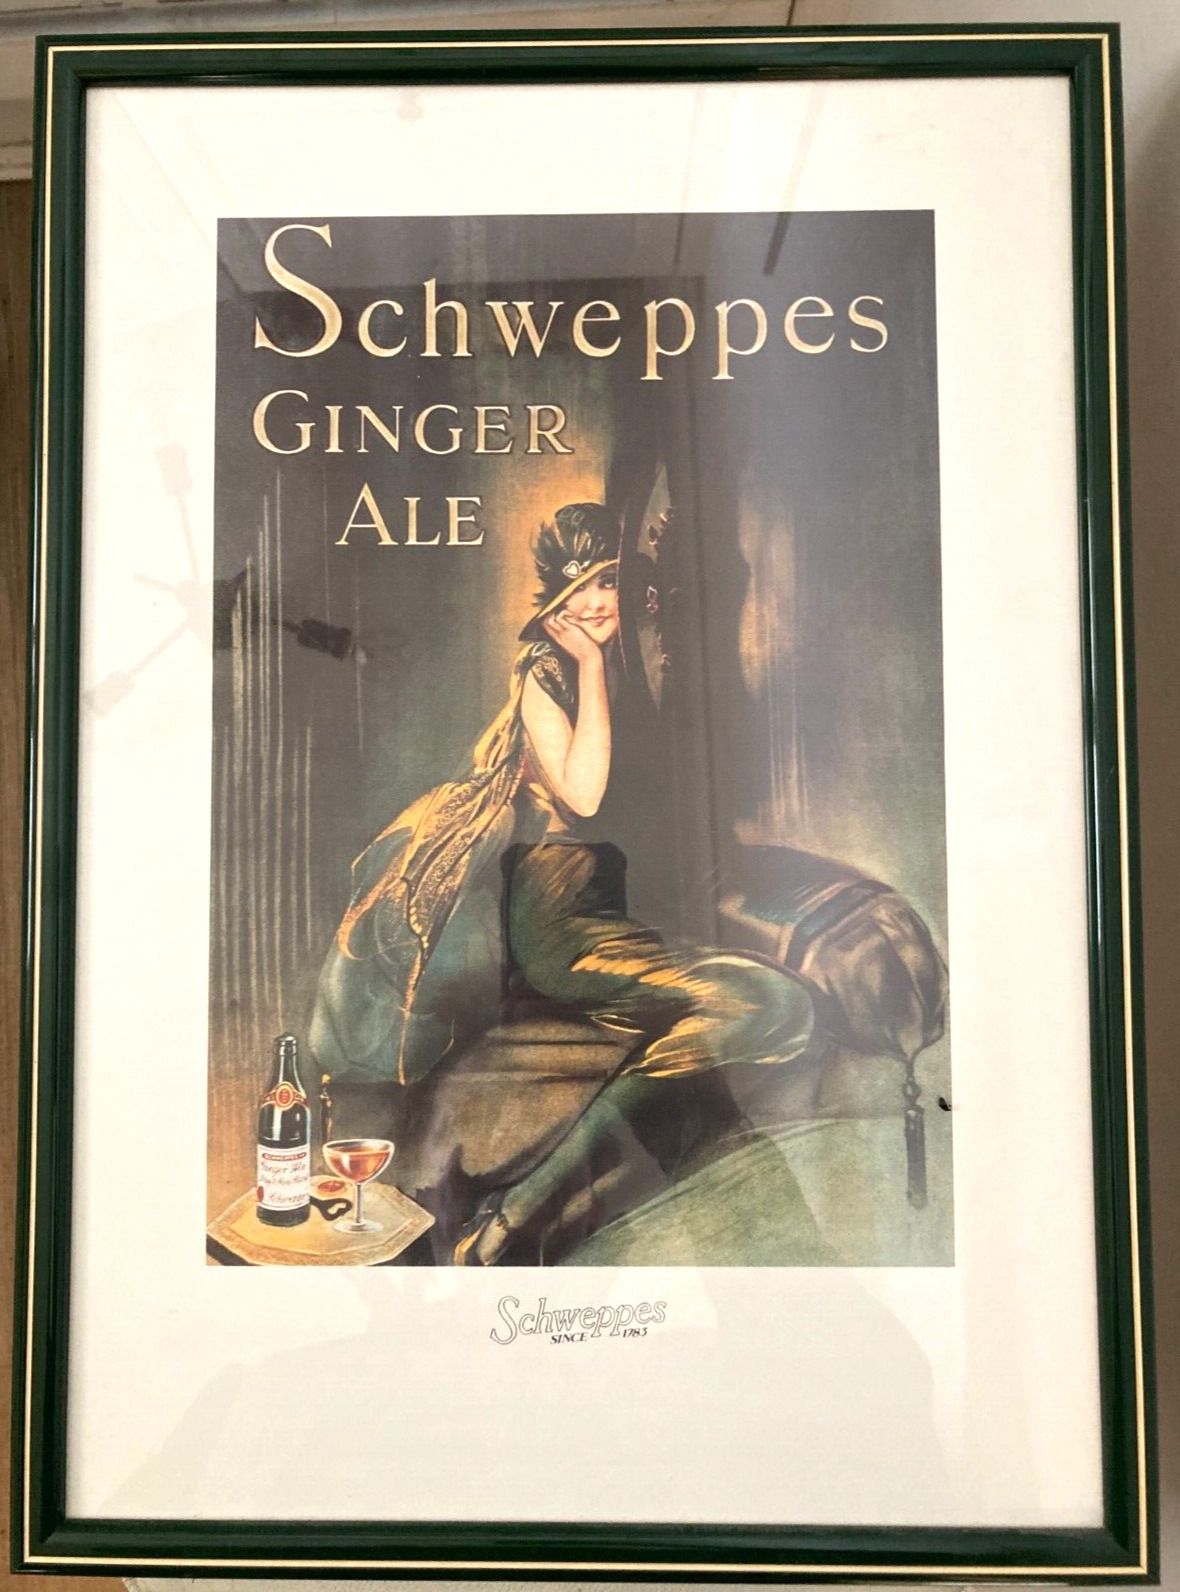 Retro Schweppes Ginger Ale Framed Ad Poster 44 x 32cms